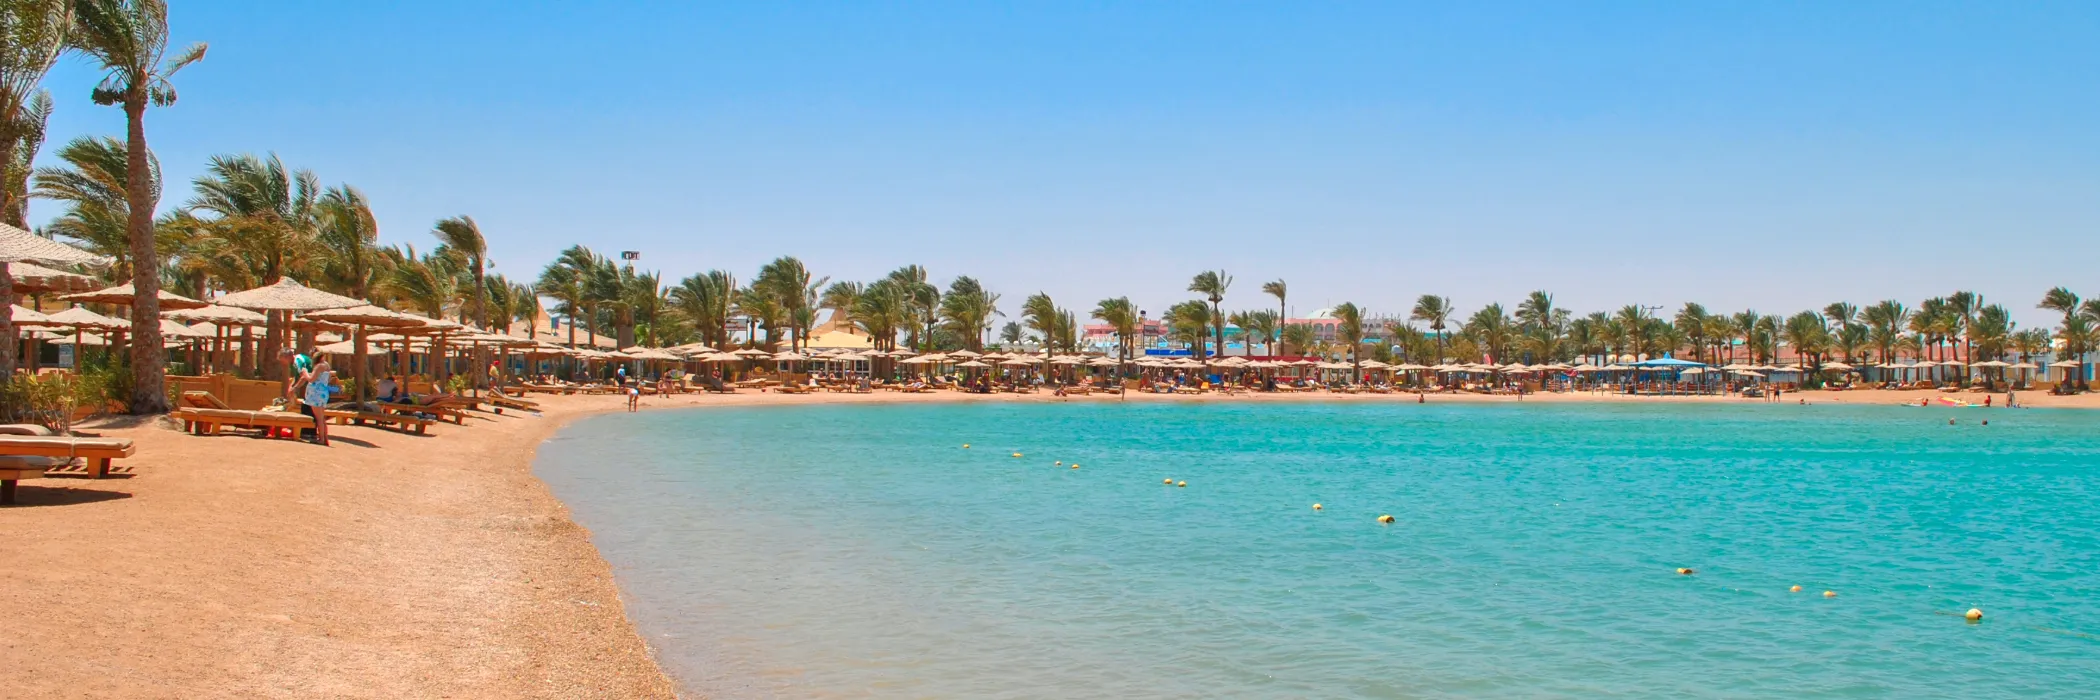 All Inclusive Hurghada Holidays - Egypt